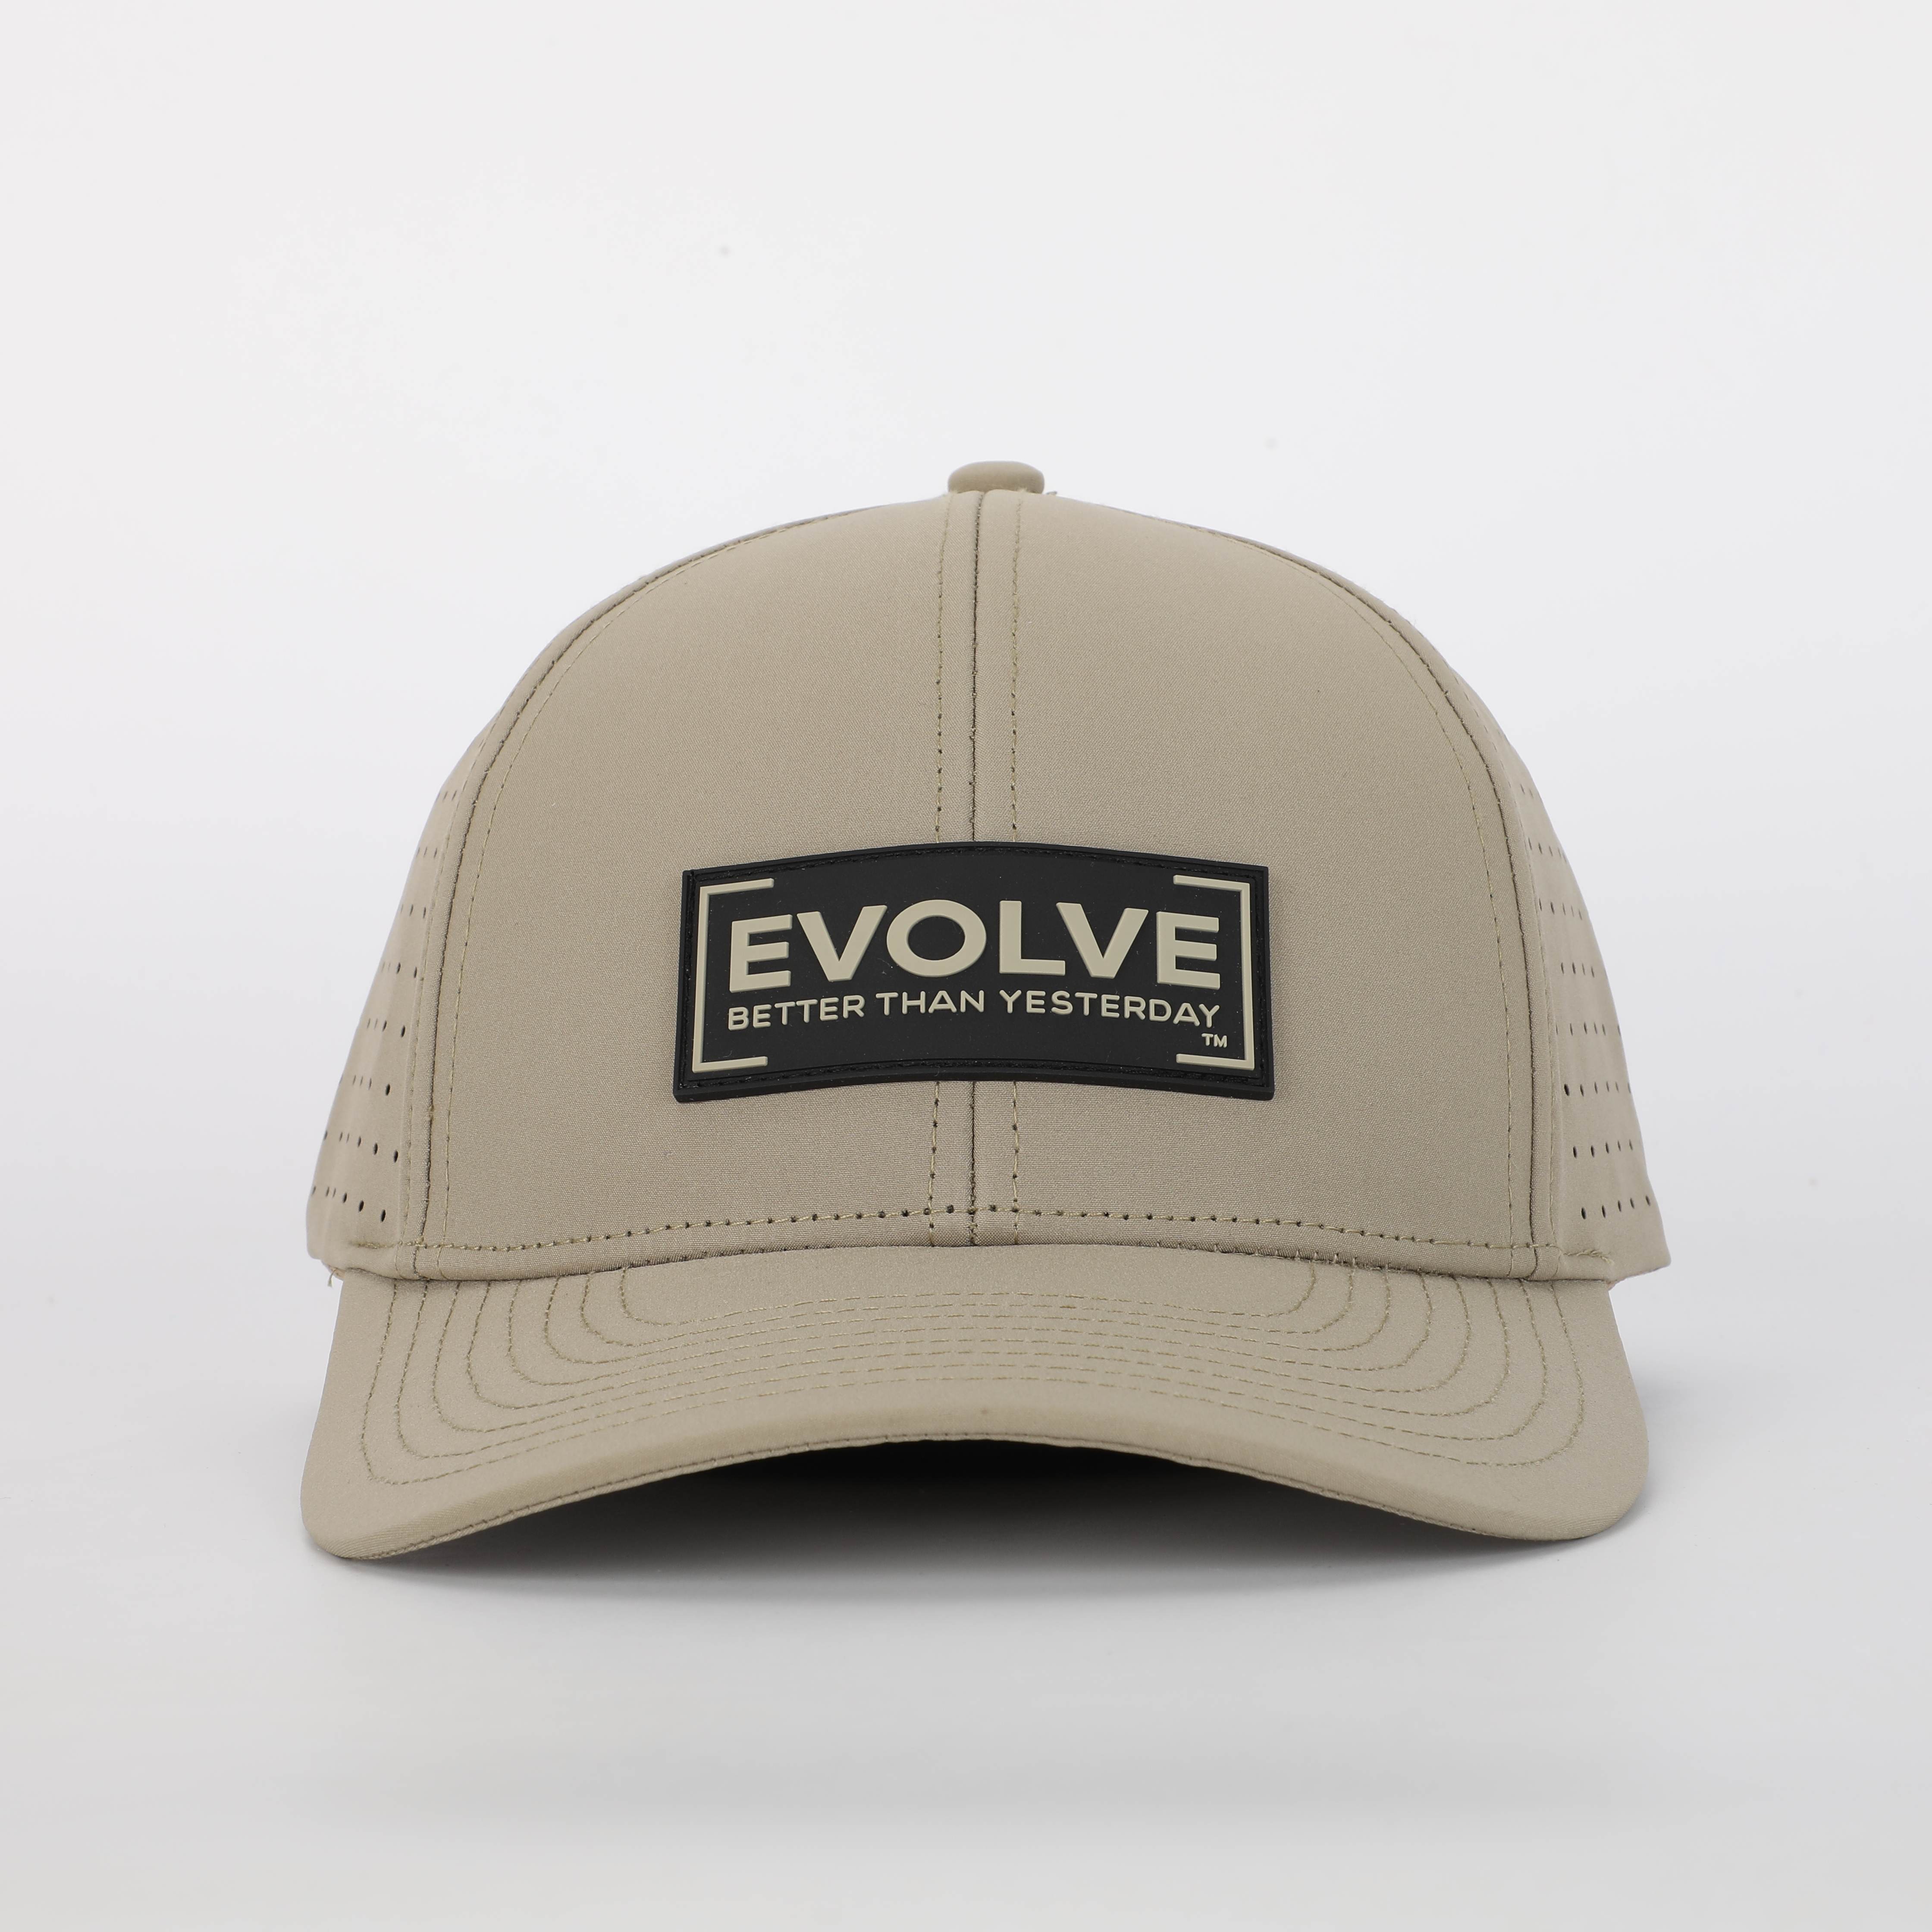 Evolve "Better Than Yesterday" Snapback Hat for Men and Women (Polyester Blend, Tan/Black)